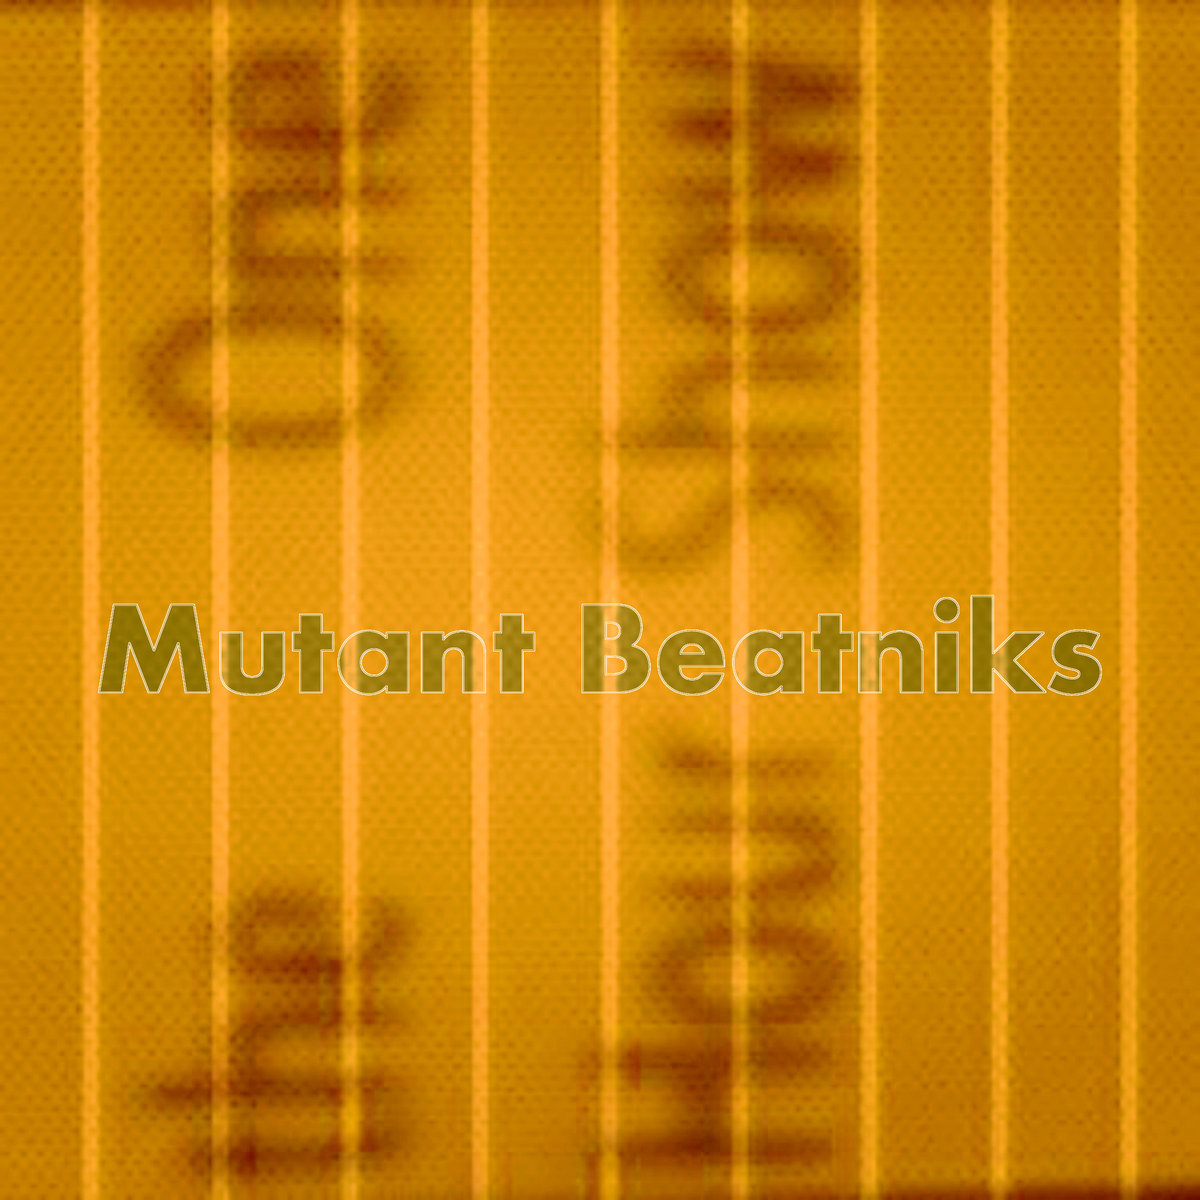 Mutant Beatniks – the One Hour Show